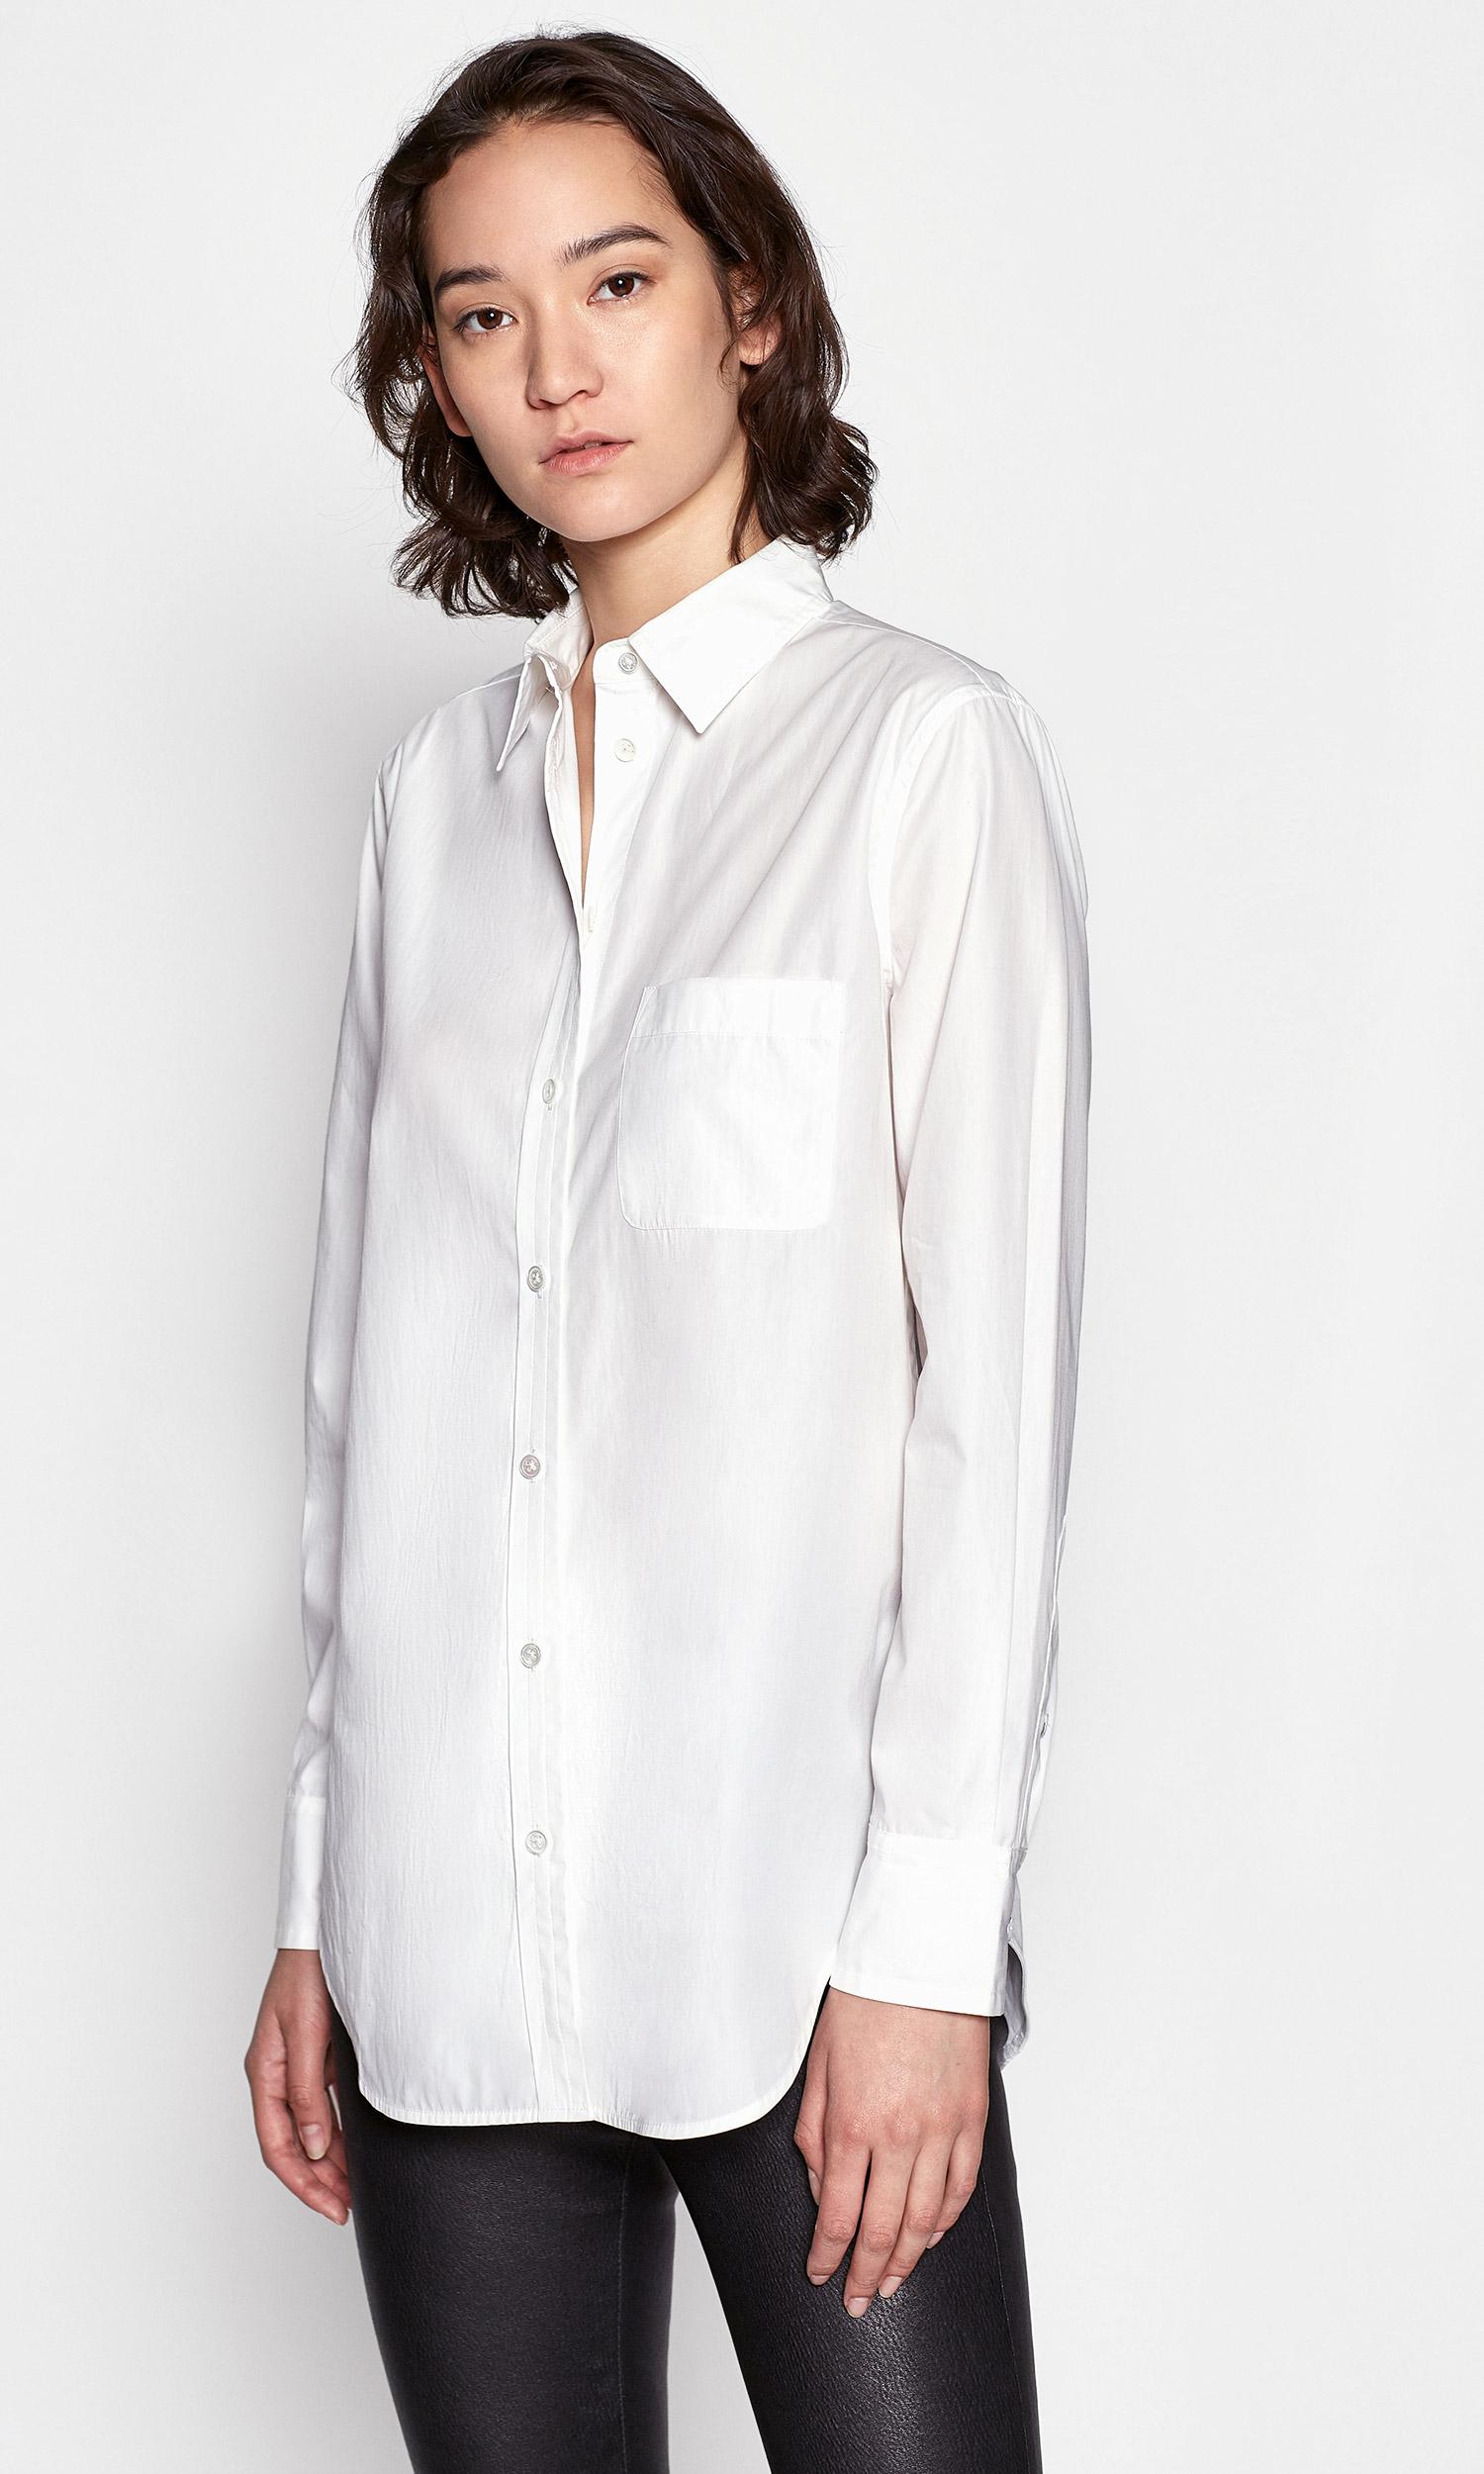 Equipment Kenton Cotton Shirt in Bright White (White) - Lyst